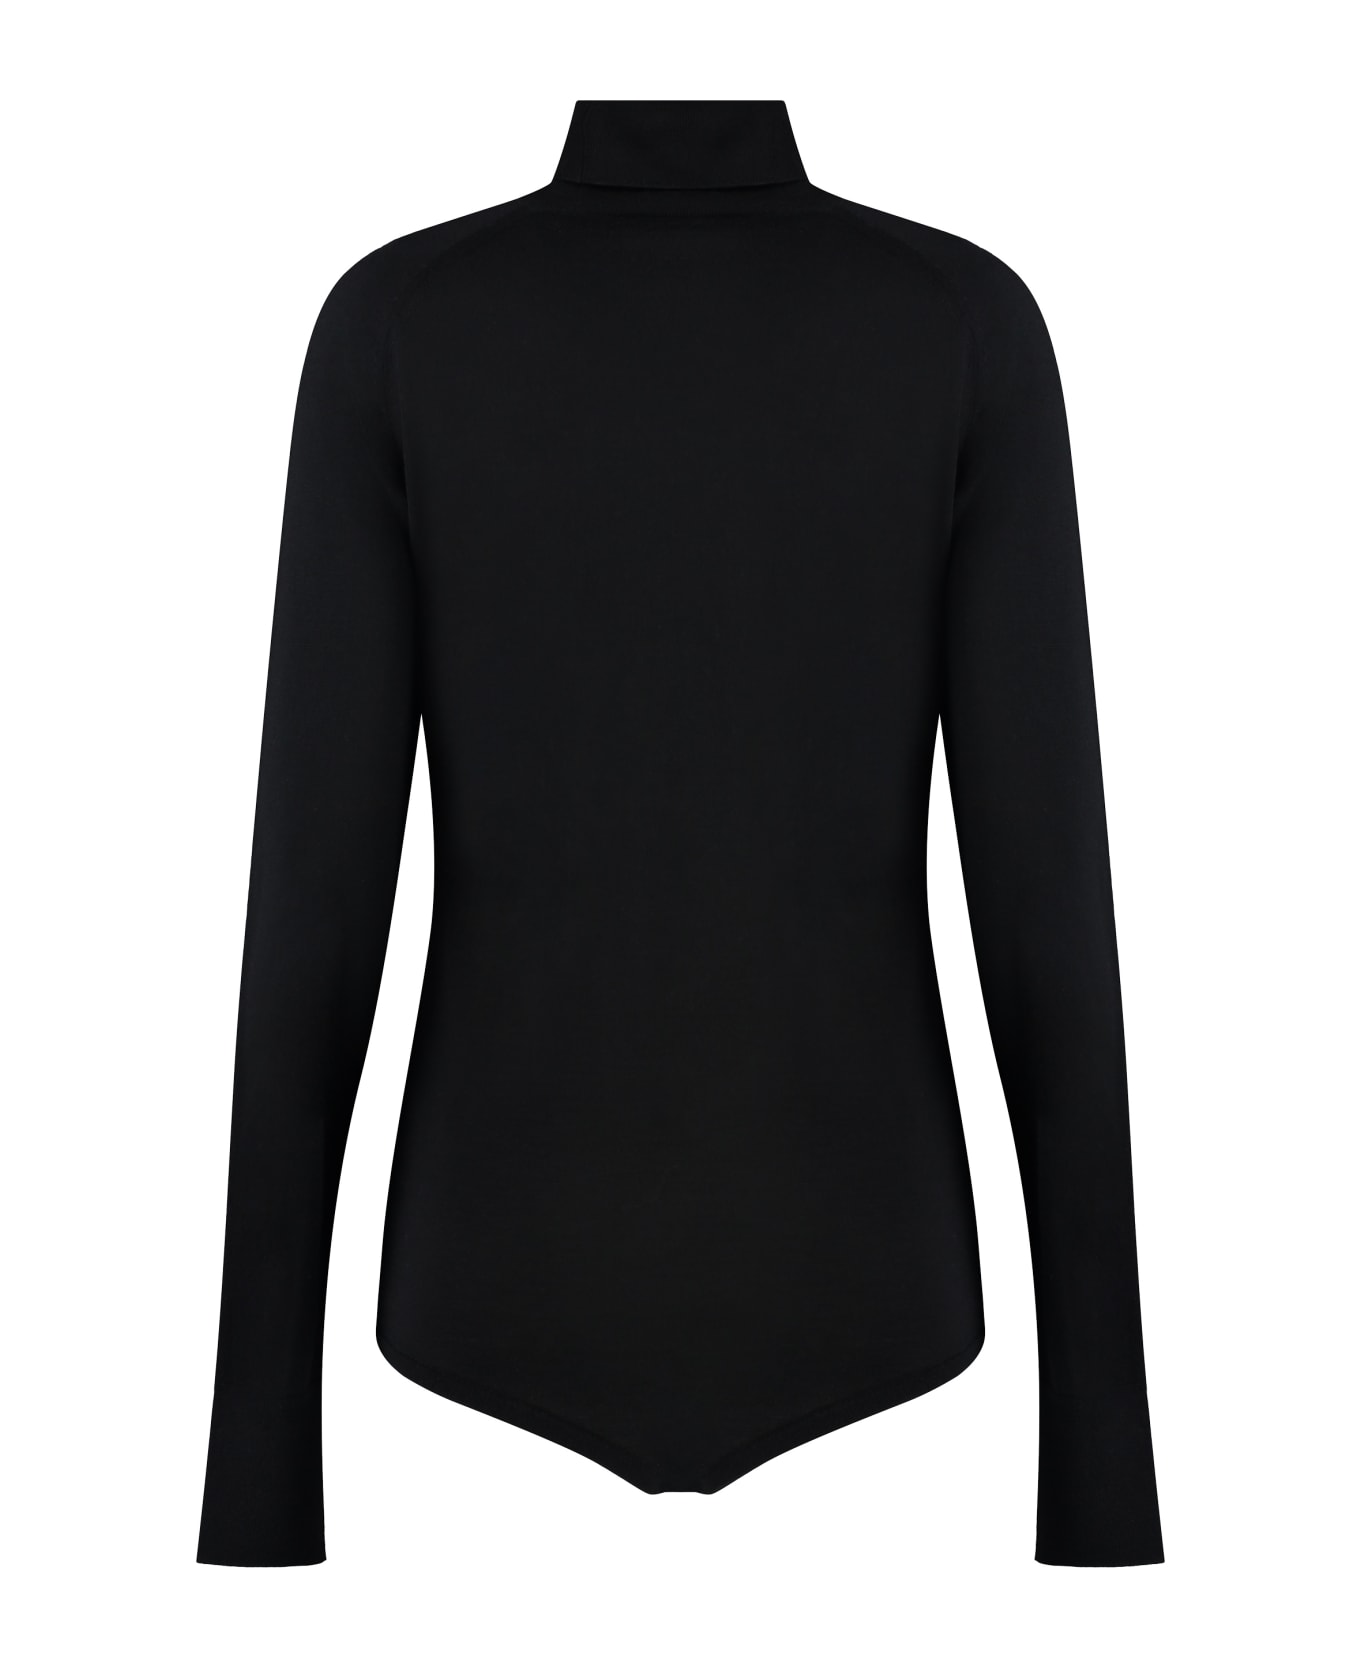 Victoria Beckham Knit Bodysuit - black ボディスーツ